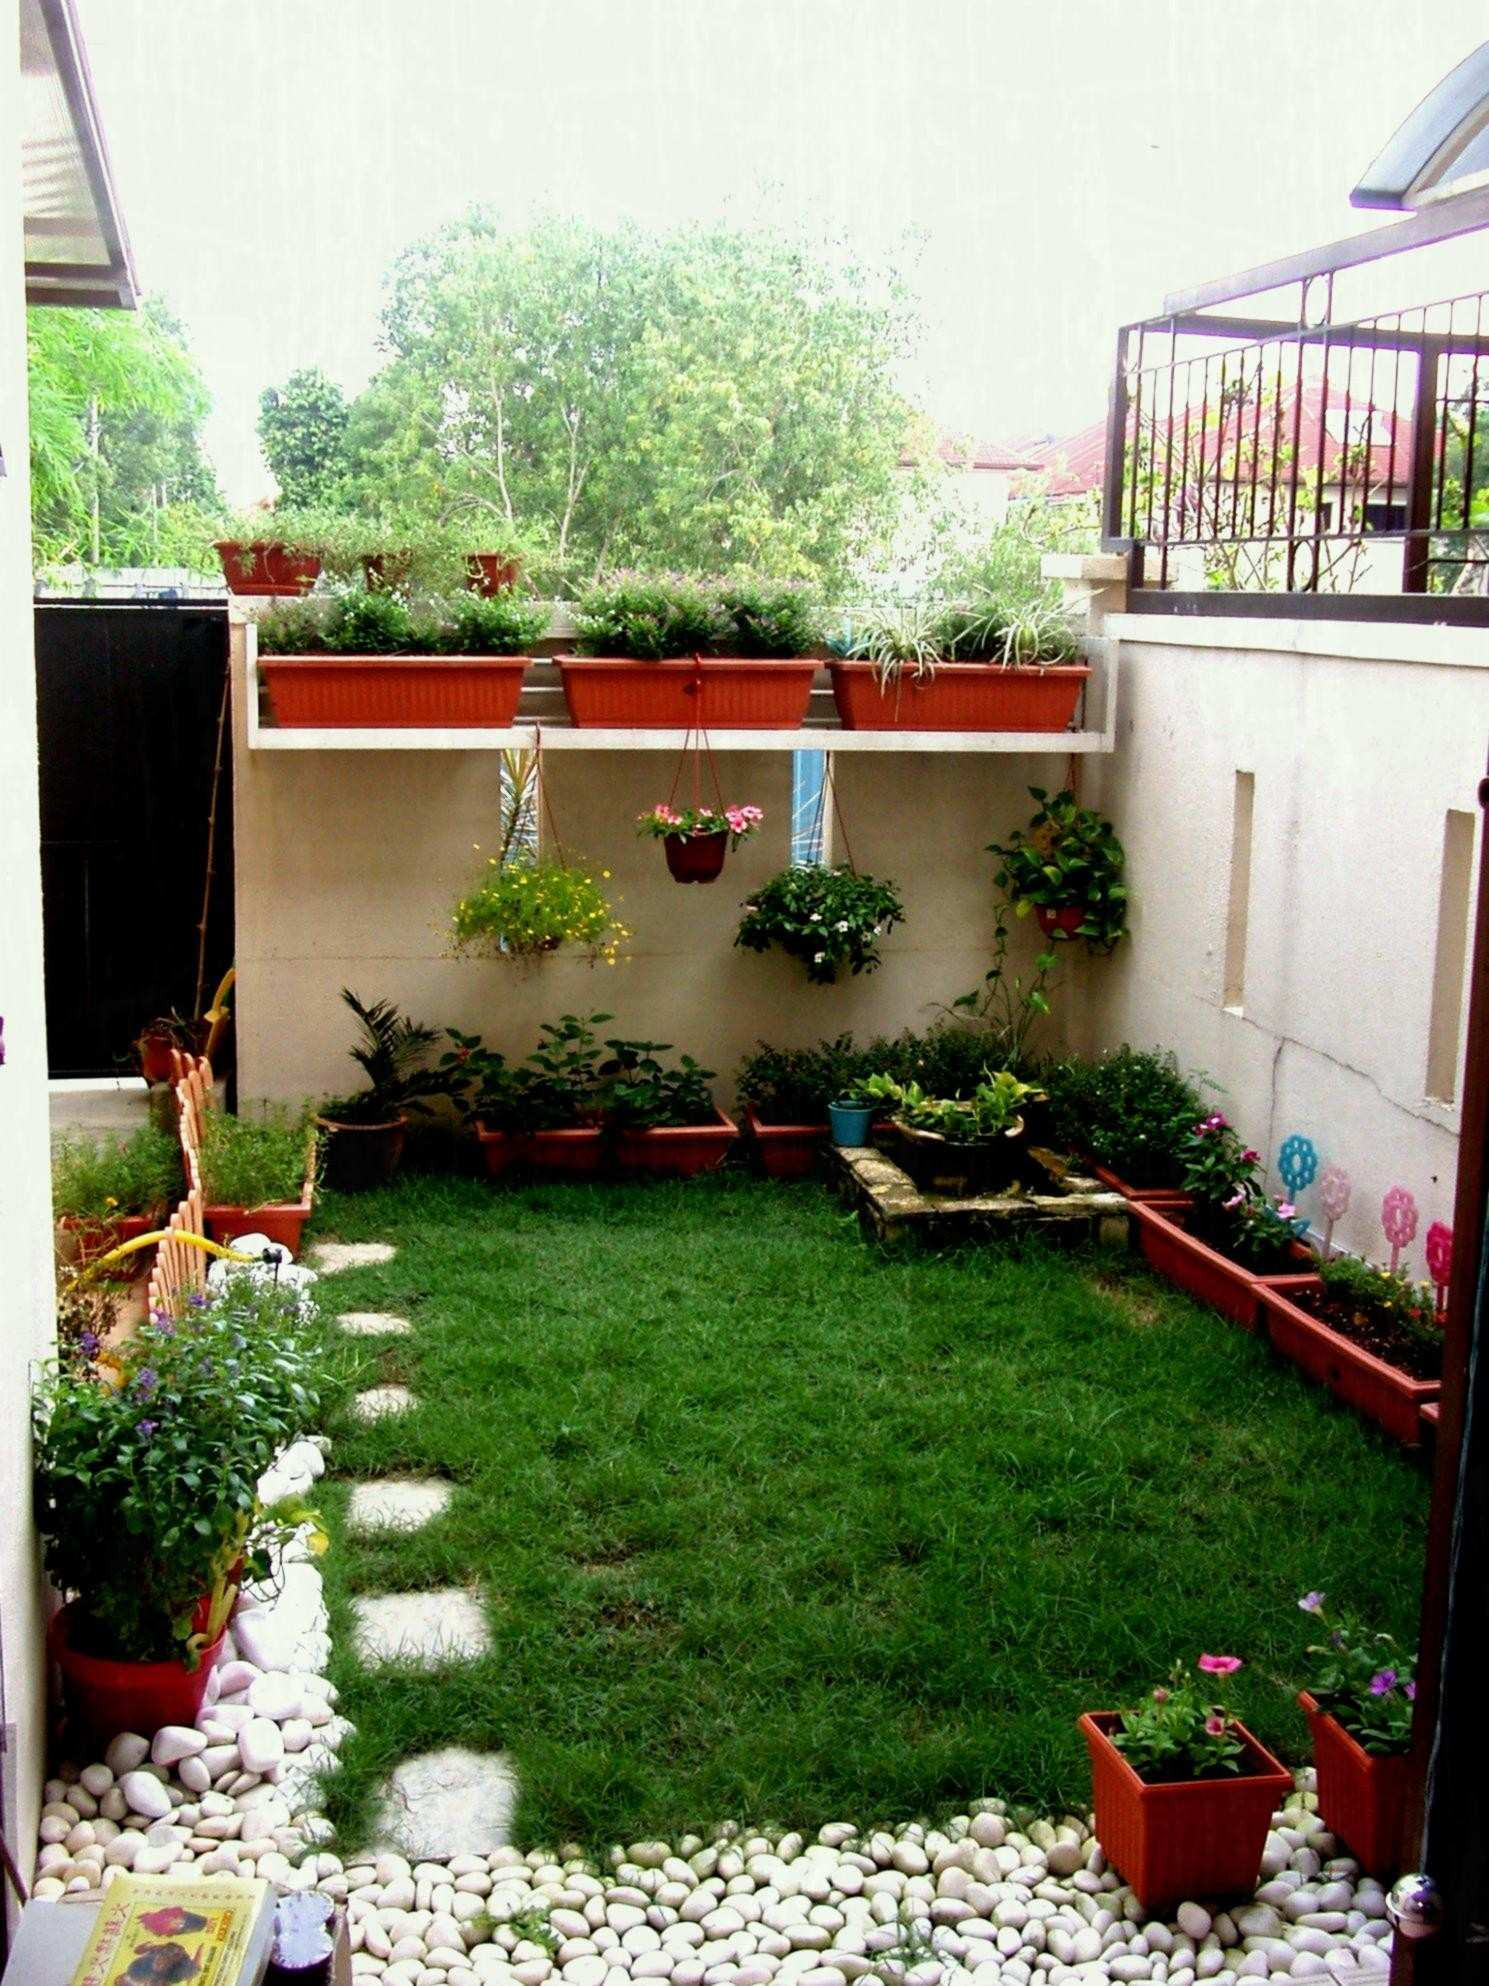 Best ideas about Apartment Garden Ideas
. Save or Pin Apartment Patio Garden Ideas Luxury For Small Balcony Now.